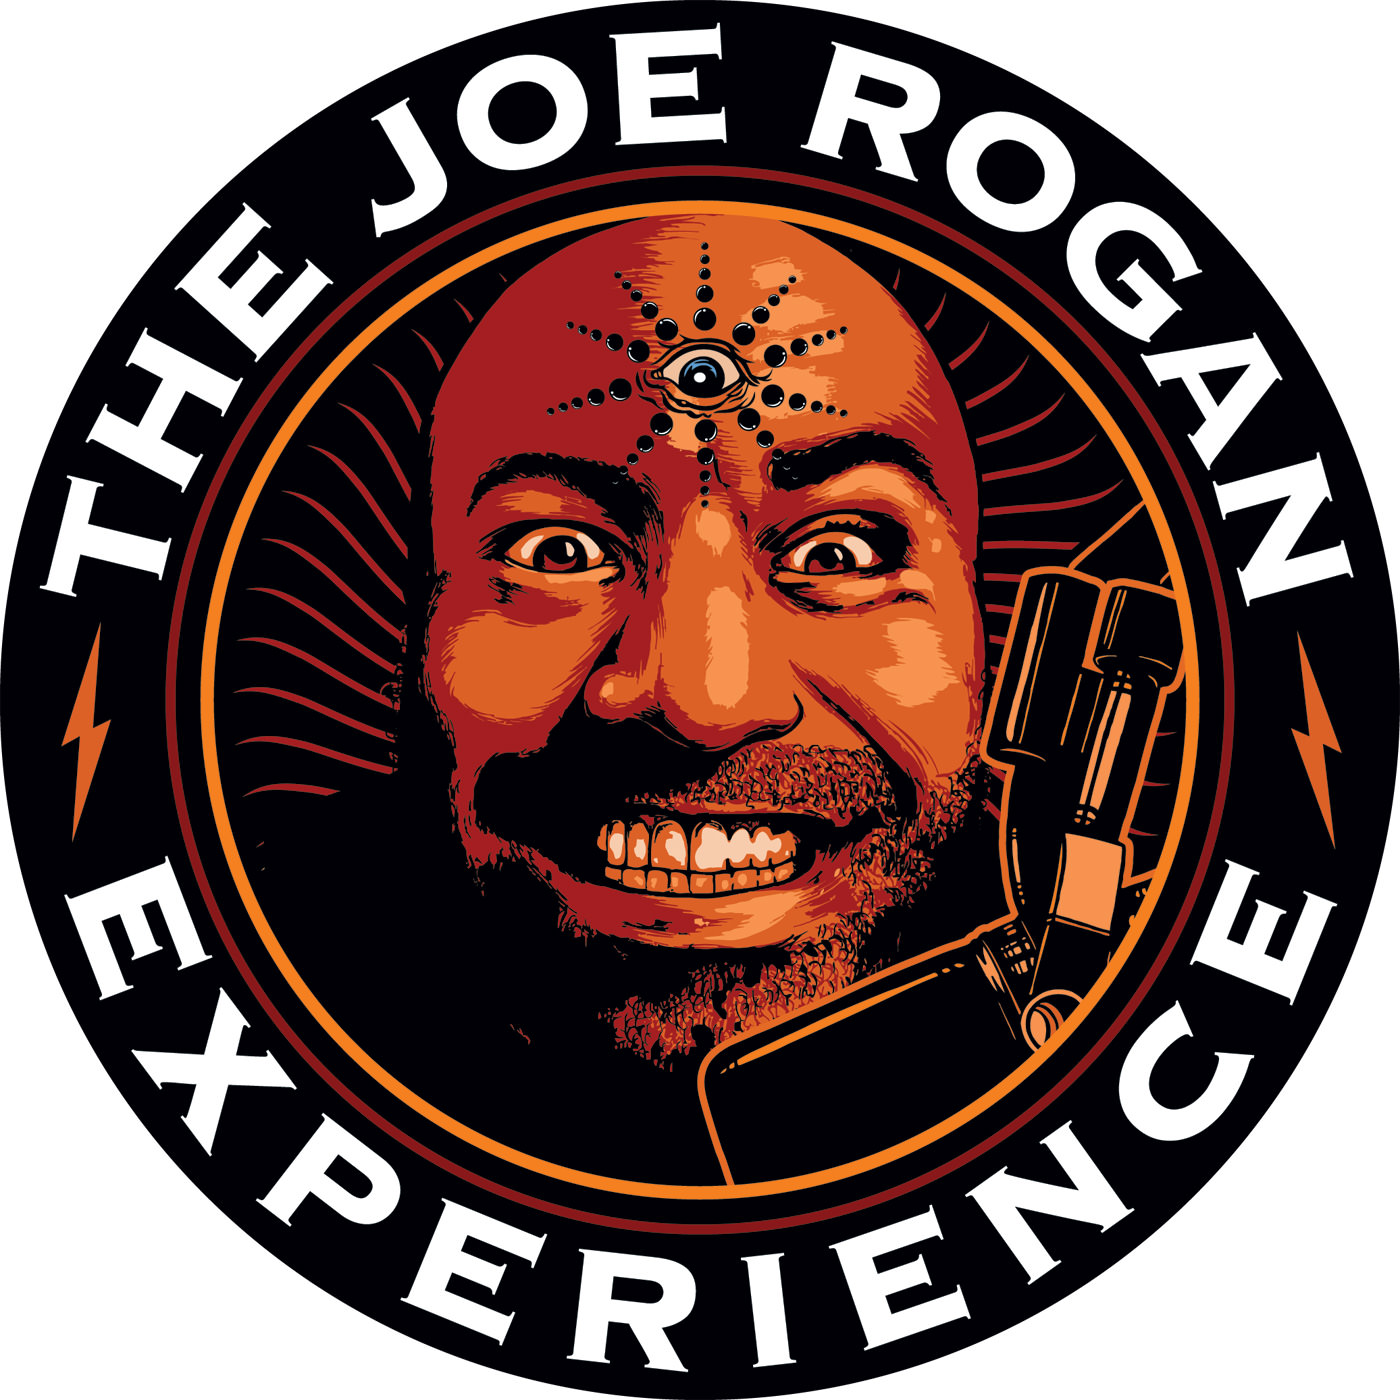 Joe Rogan's Master Plan in Austin: Podcast Studio, Comedy Club, & Podcast Ranch